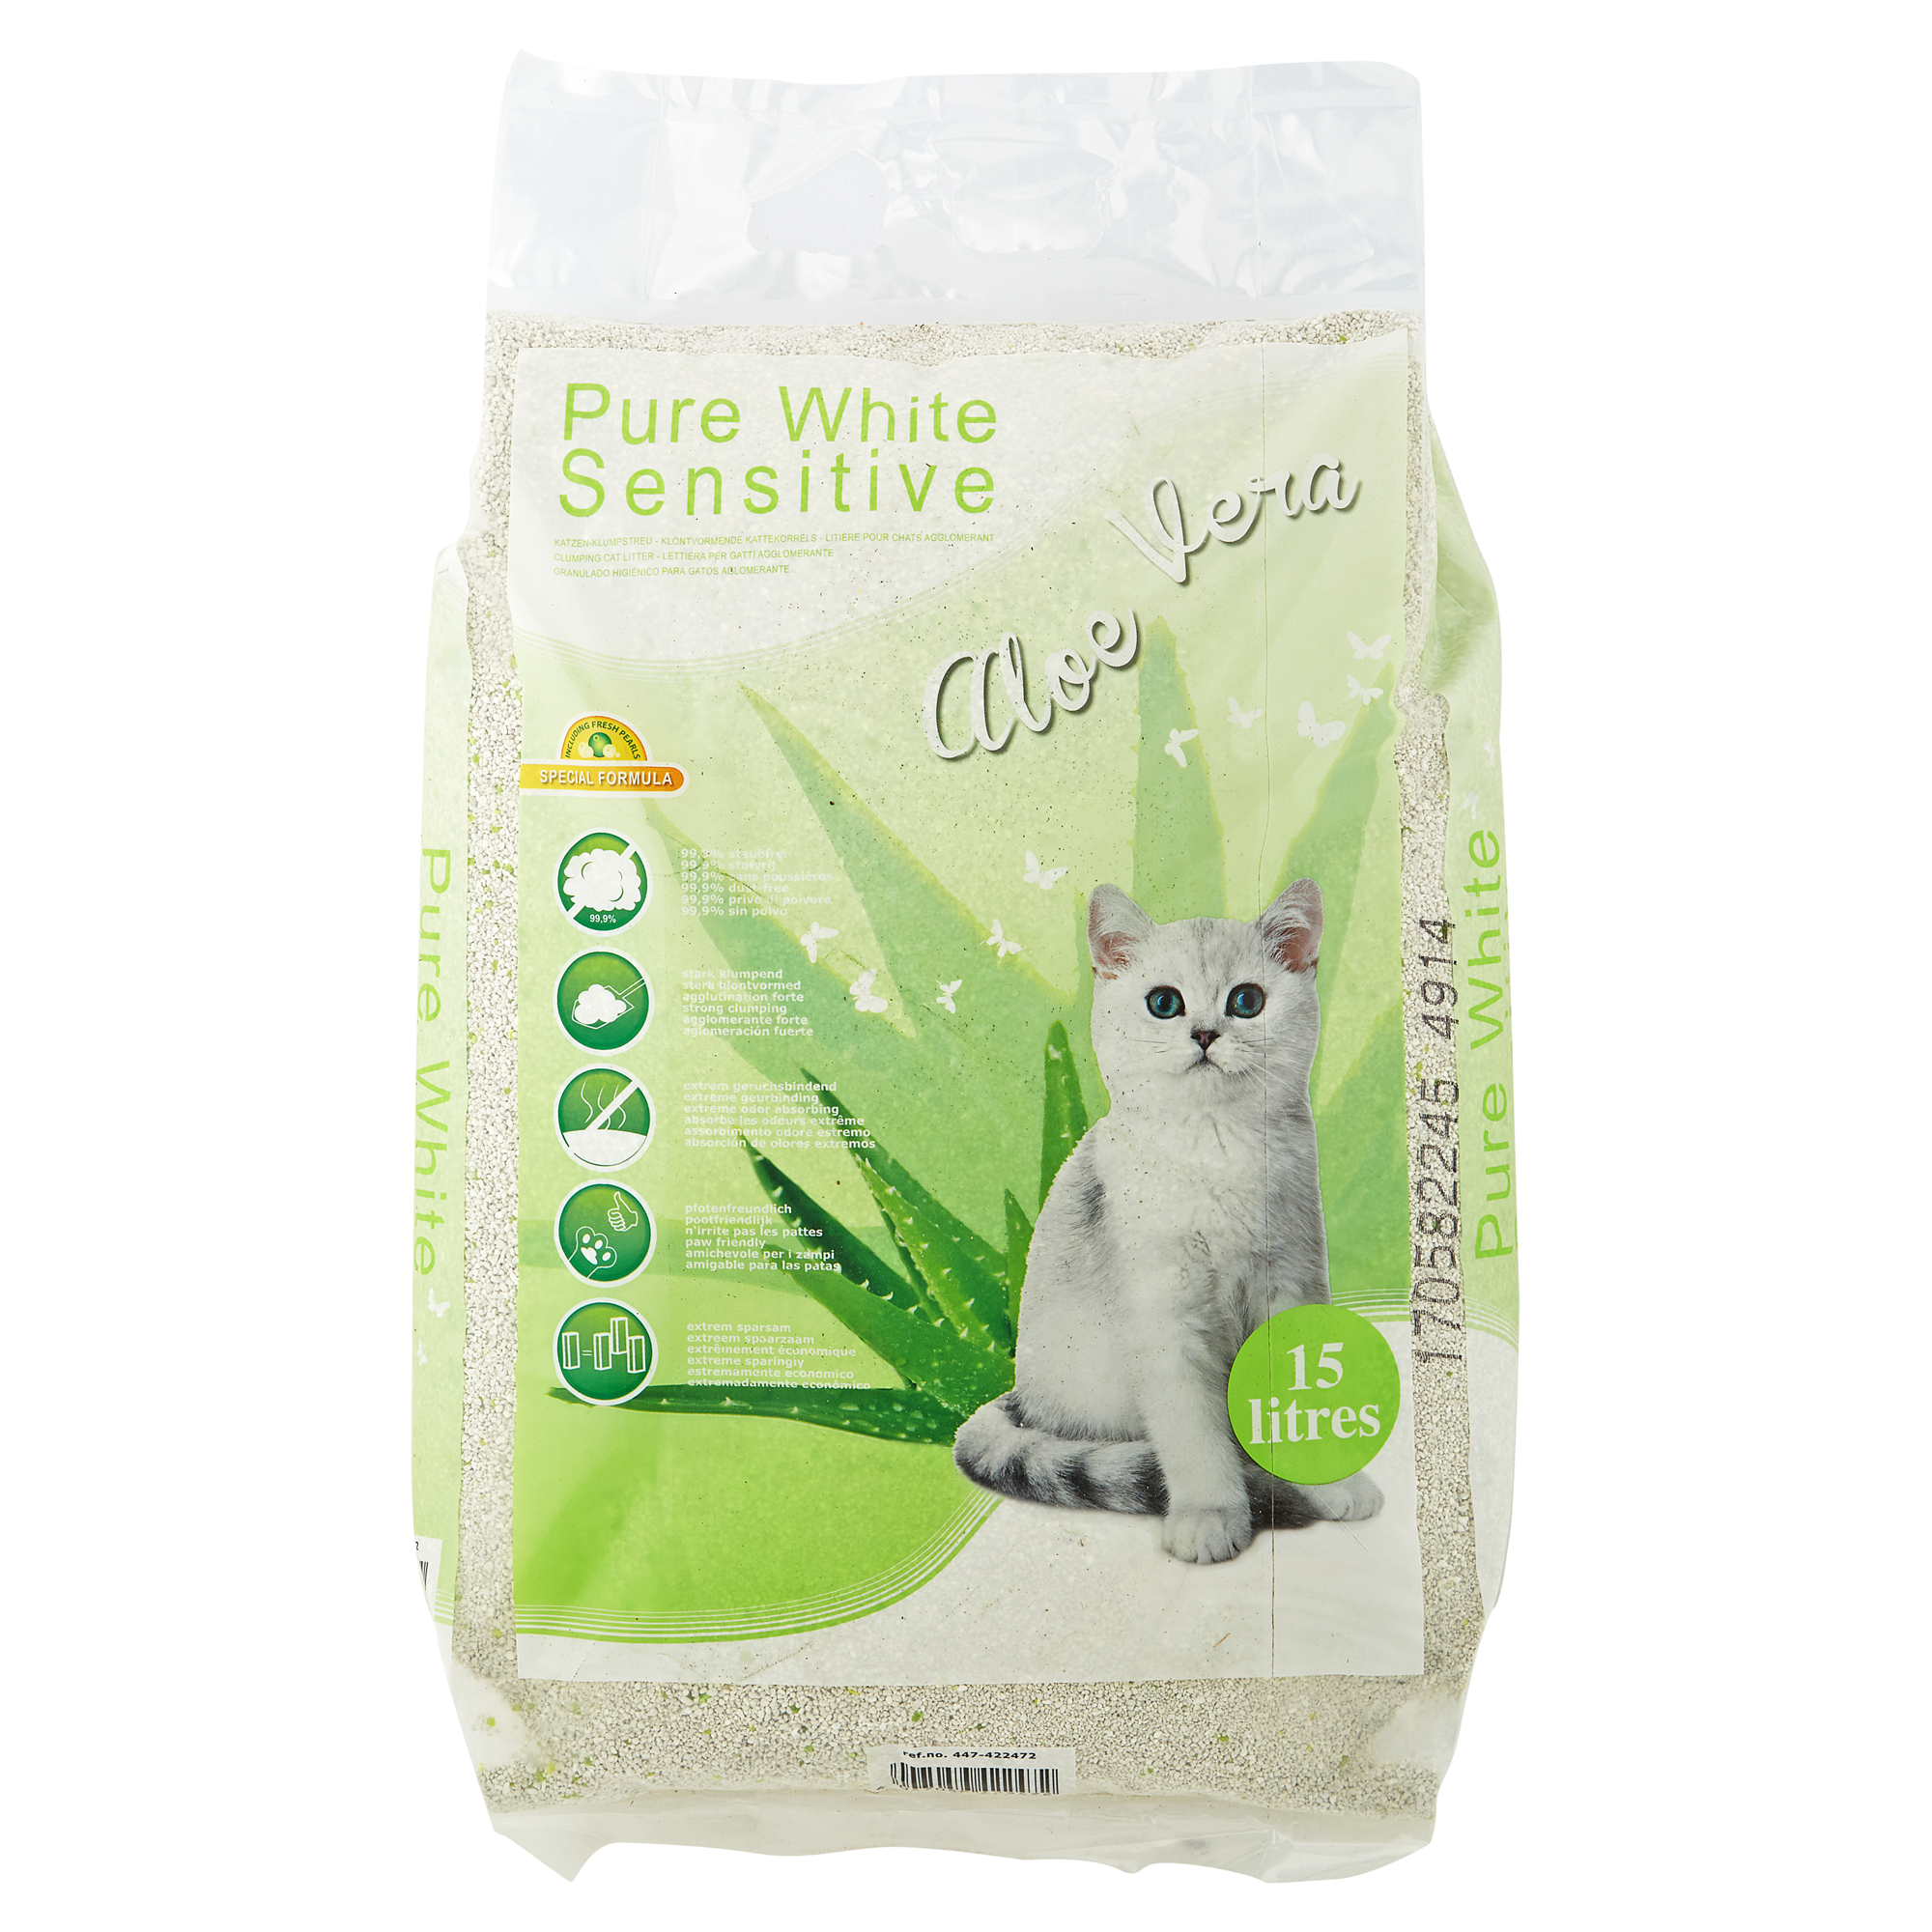 Klumpstreu "Pure White Sensitive" 15 l Aloe Vera + product picture